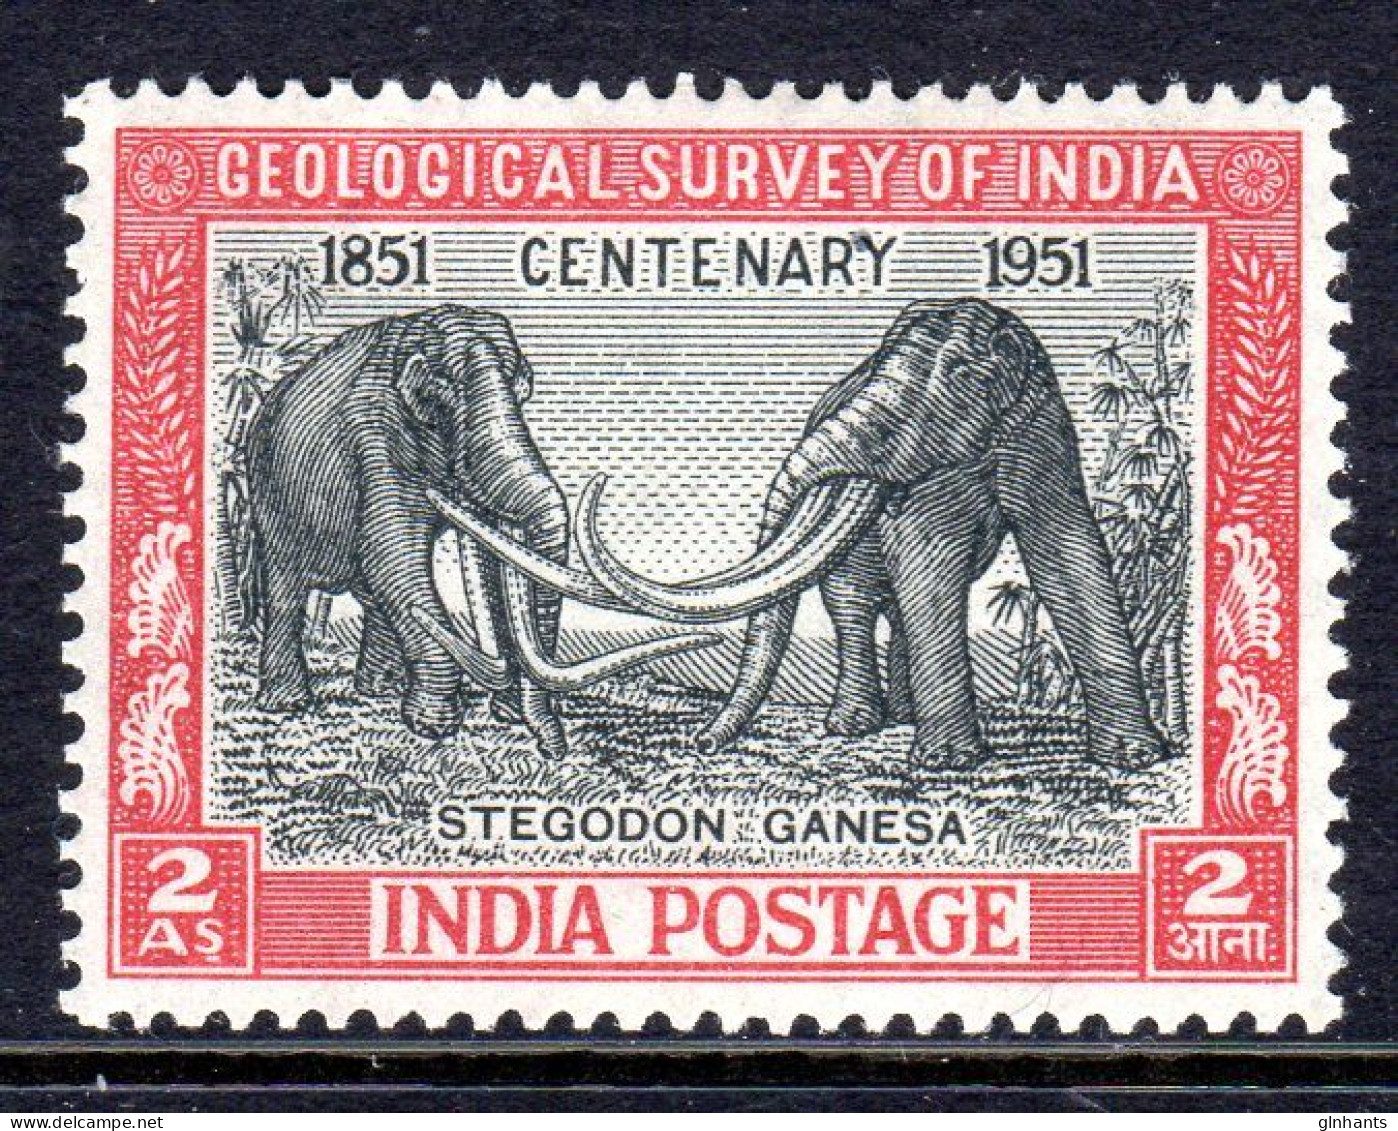 INDIA - 1951 GEOLOGICAL SURVEY ANNIVERSARY STEGODON STAMP FINE MOUNTED MINT MM * SG 334 - Nuevos